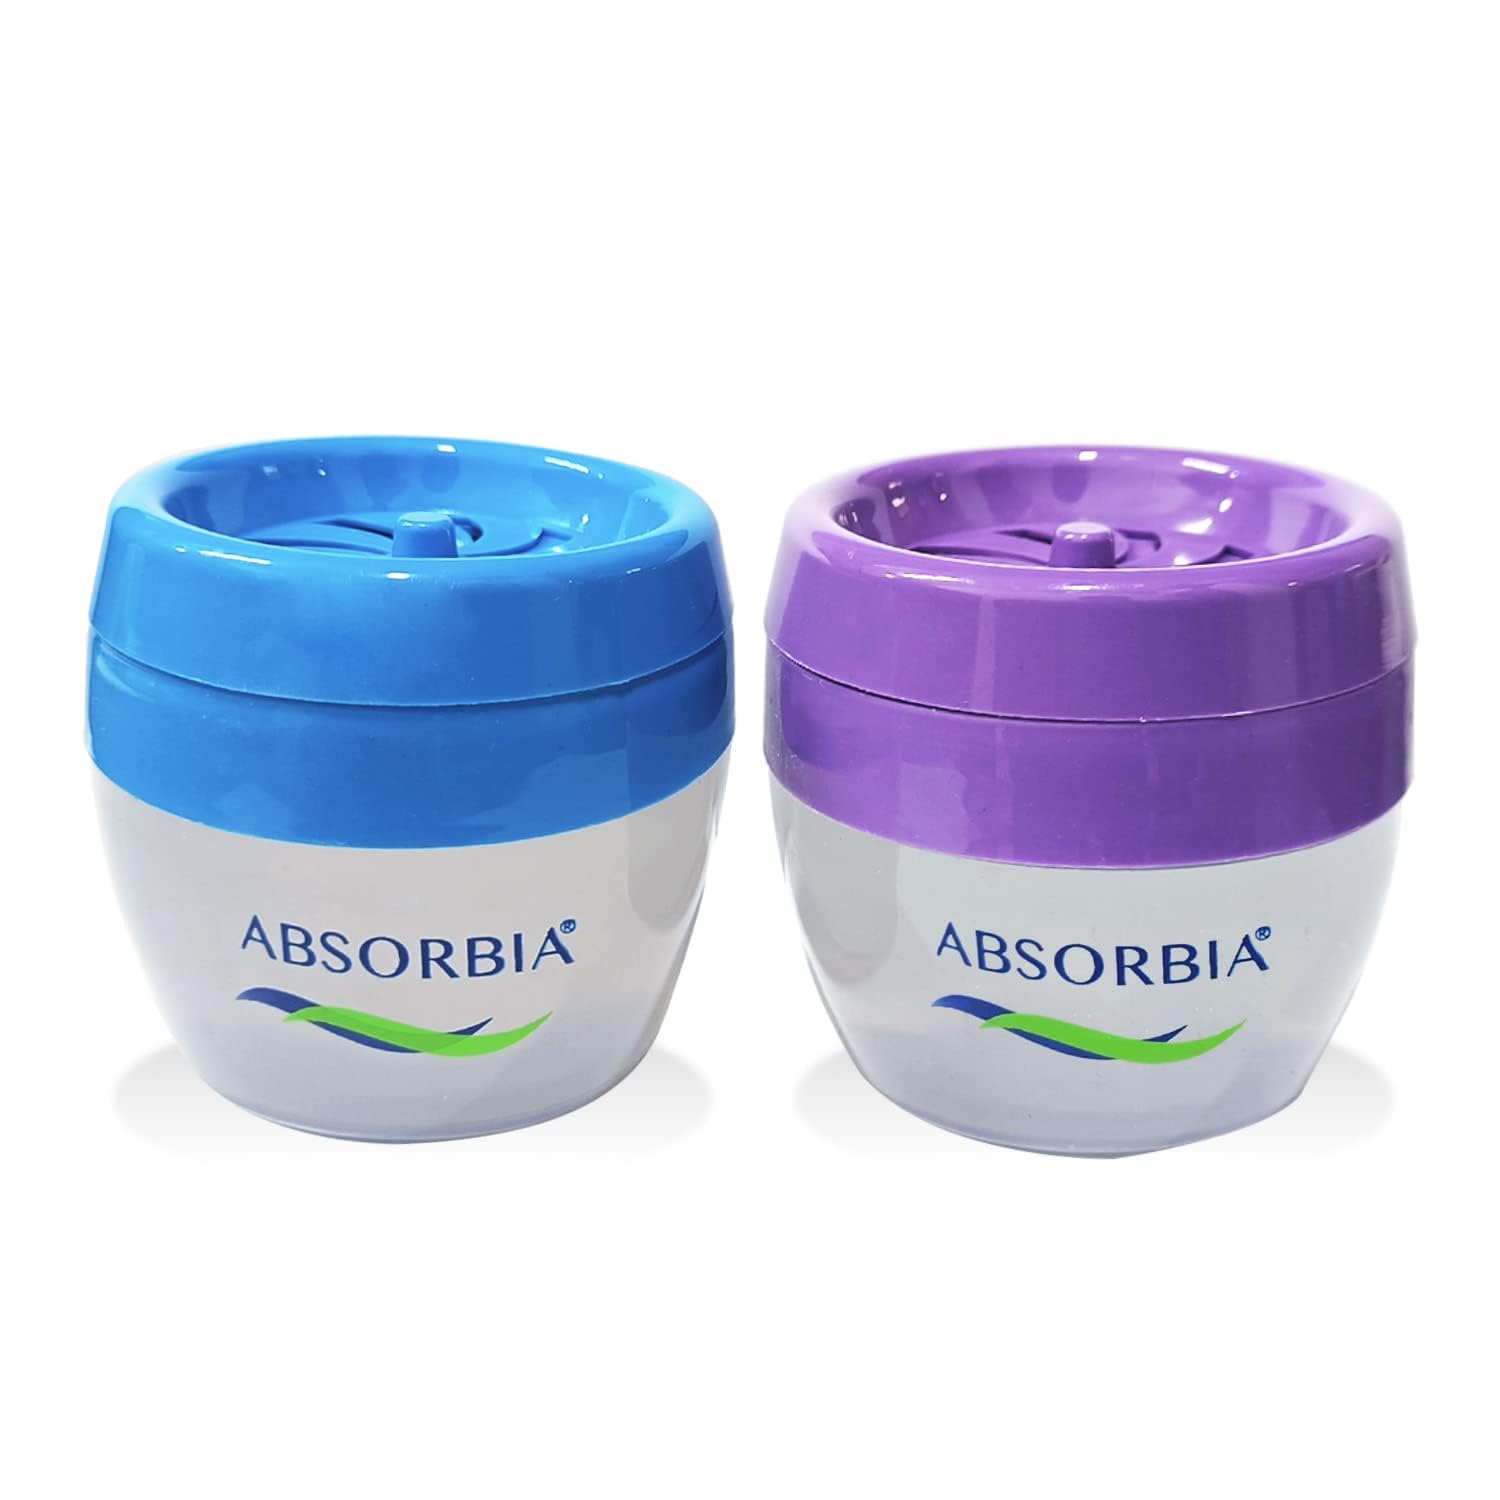 Absorbia Moisture Absorber Ultimate Large Bucket - 2kg | ABSORBIA ROOM FRESHNER SPRAY 200 ml - with Frag. Neroli Flower | Water Based (AVIATOR) Low VOC Gel Air Freshener